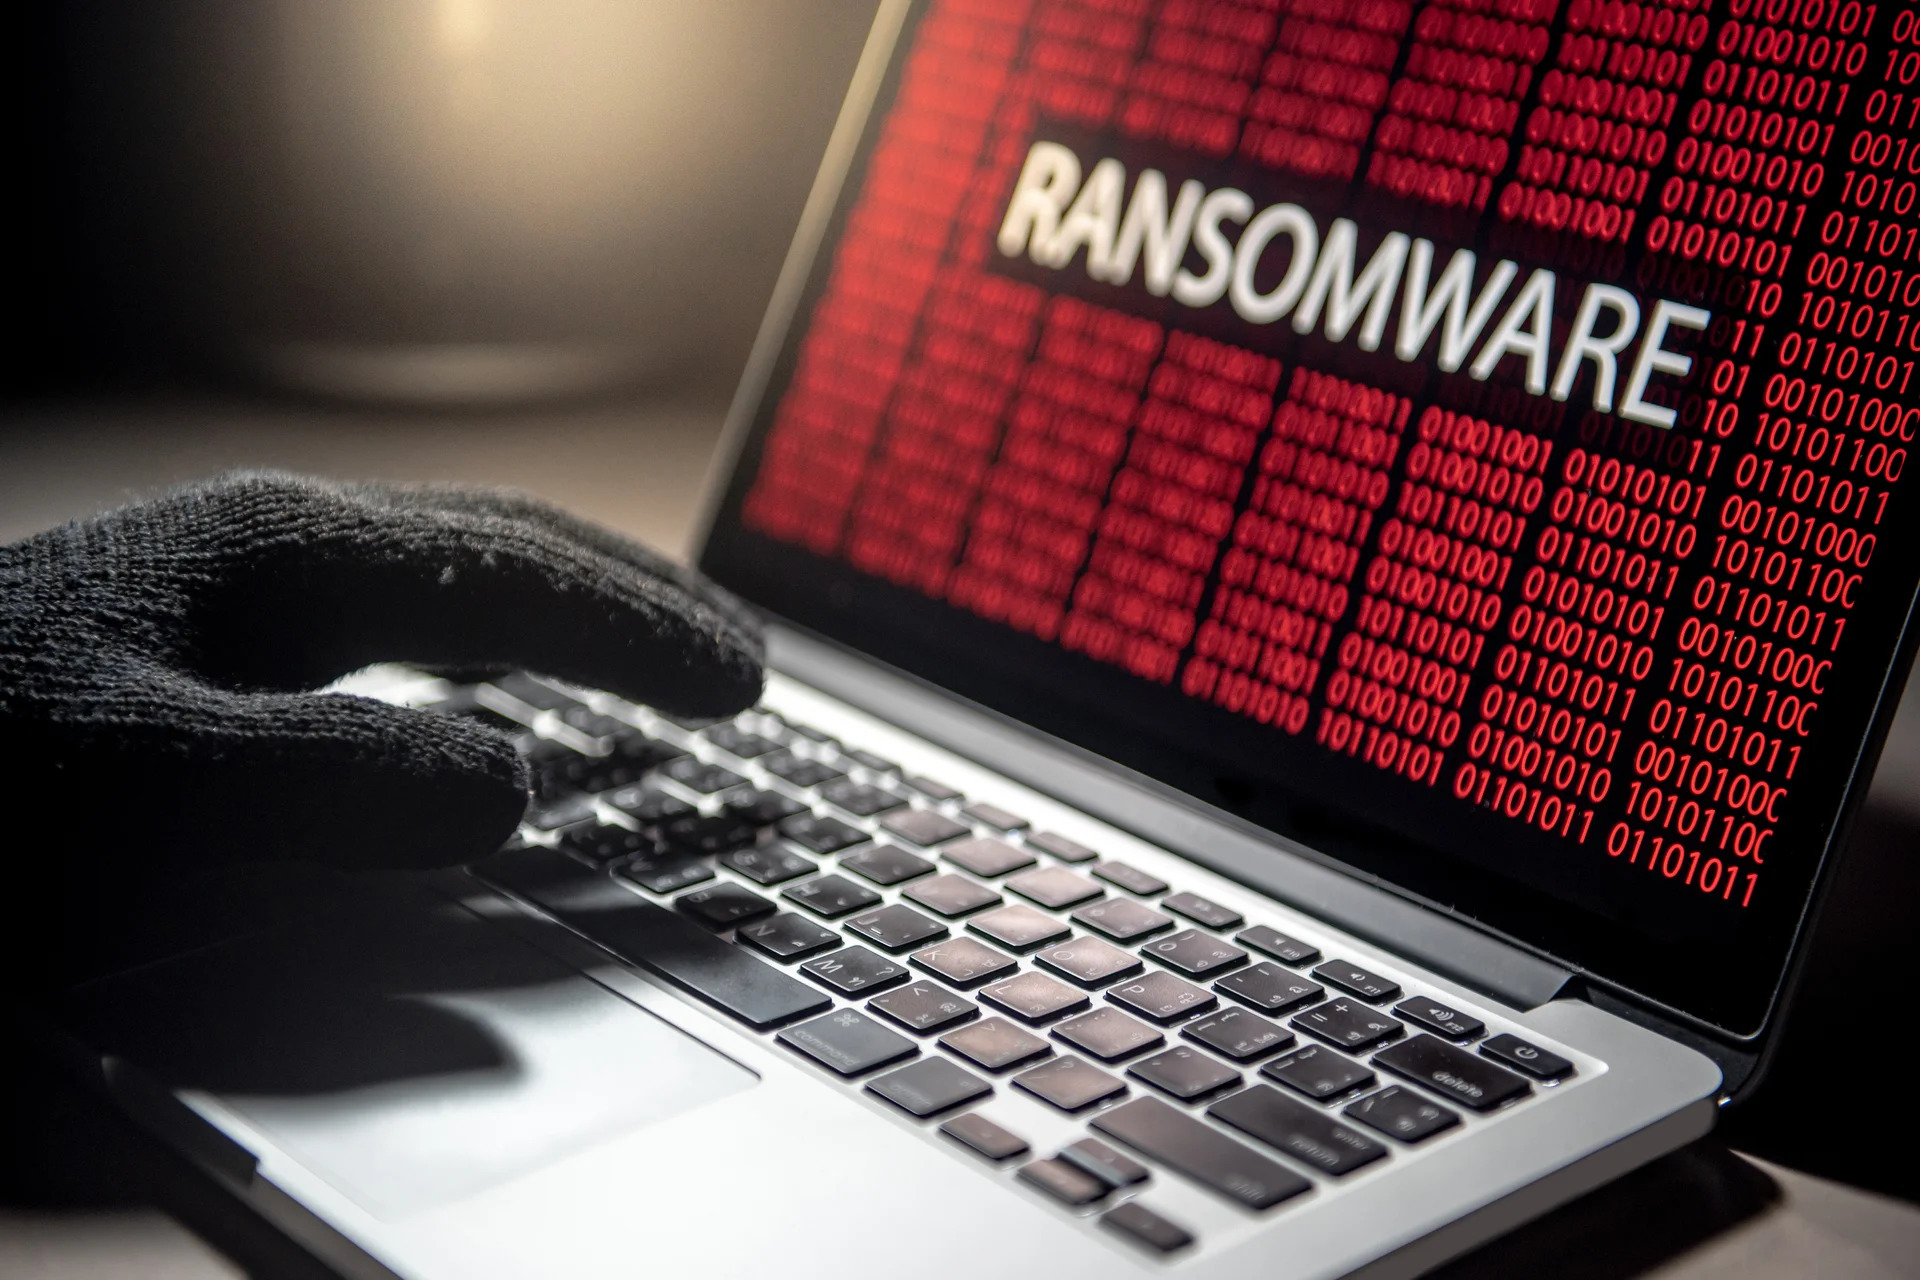 Expert Speak: Our Founder Amish Gandhi’s blog on Ransomware